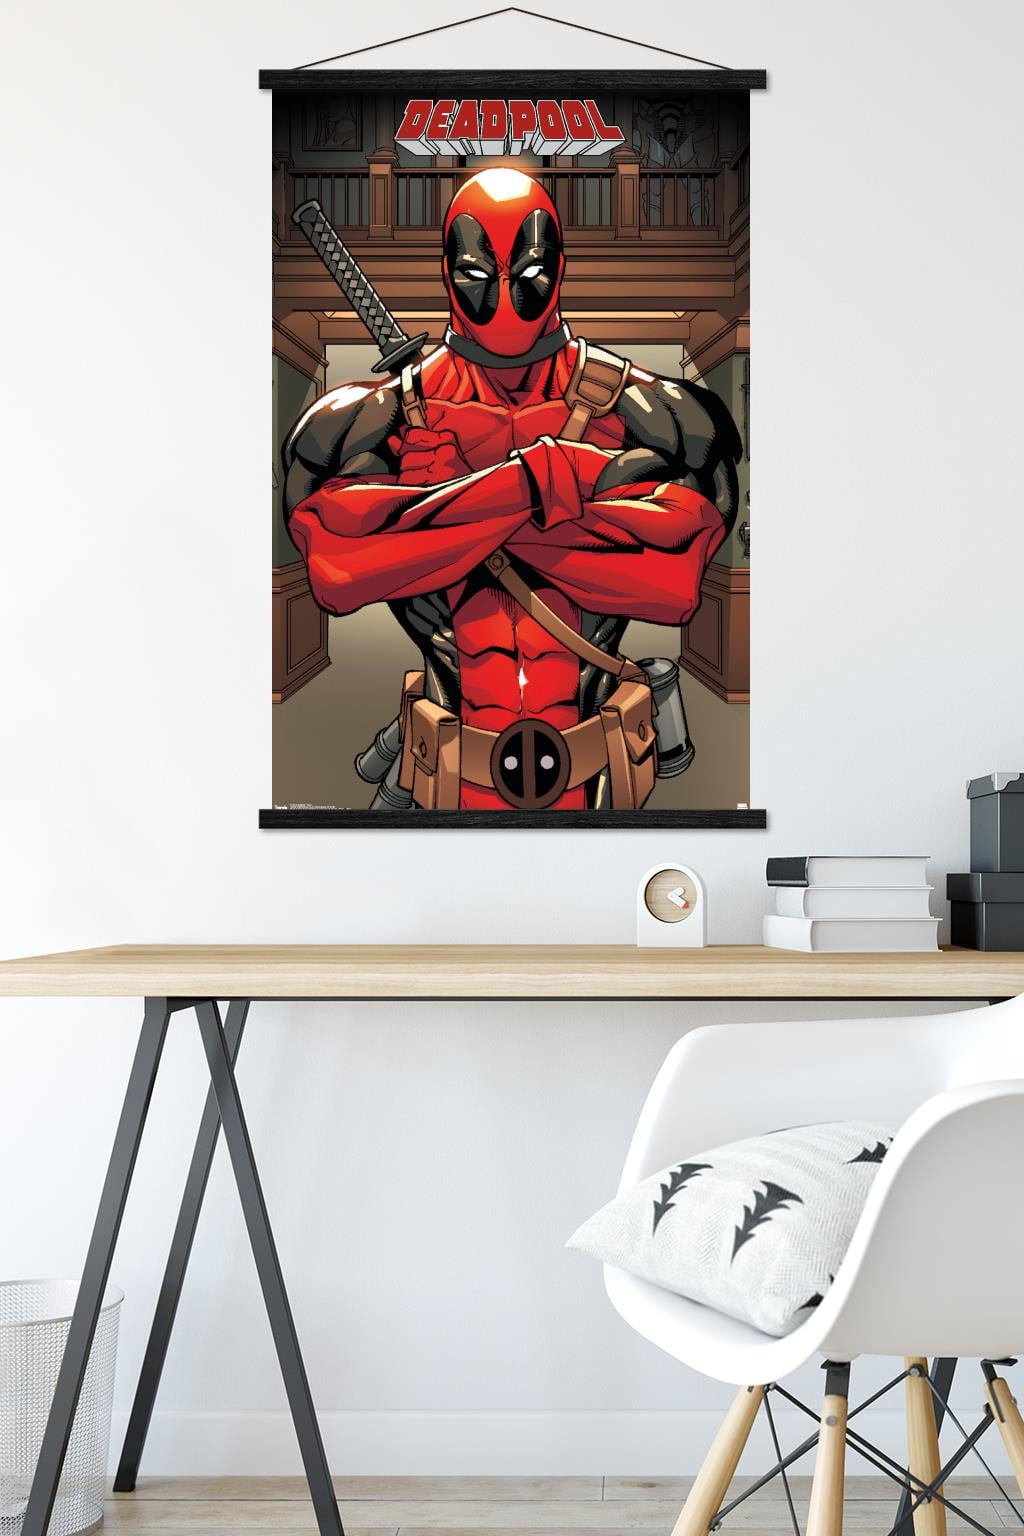 BFHDESIGN 🏴‍☠️ on X: Deadpool 3 poster made by me #Deadpool3  #MarvelStudios @robertliefeld @MarvelStudios  / X